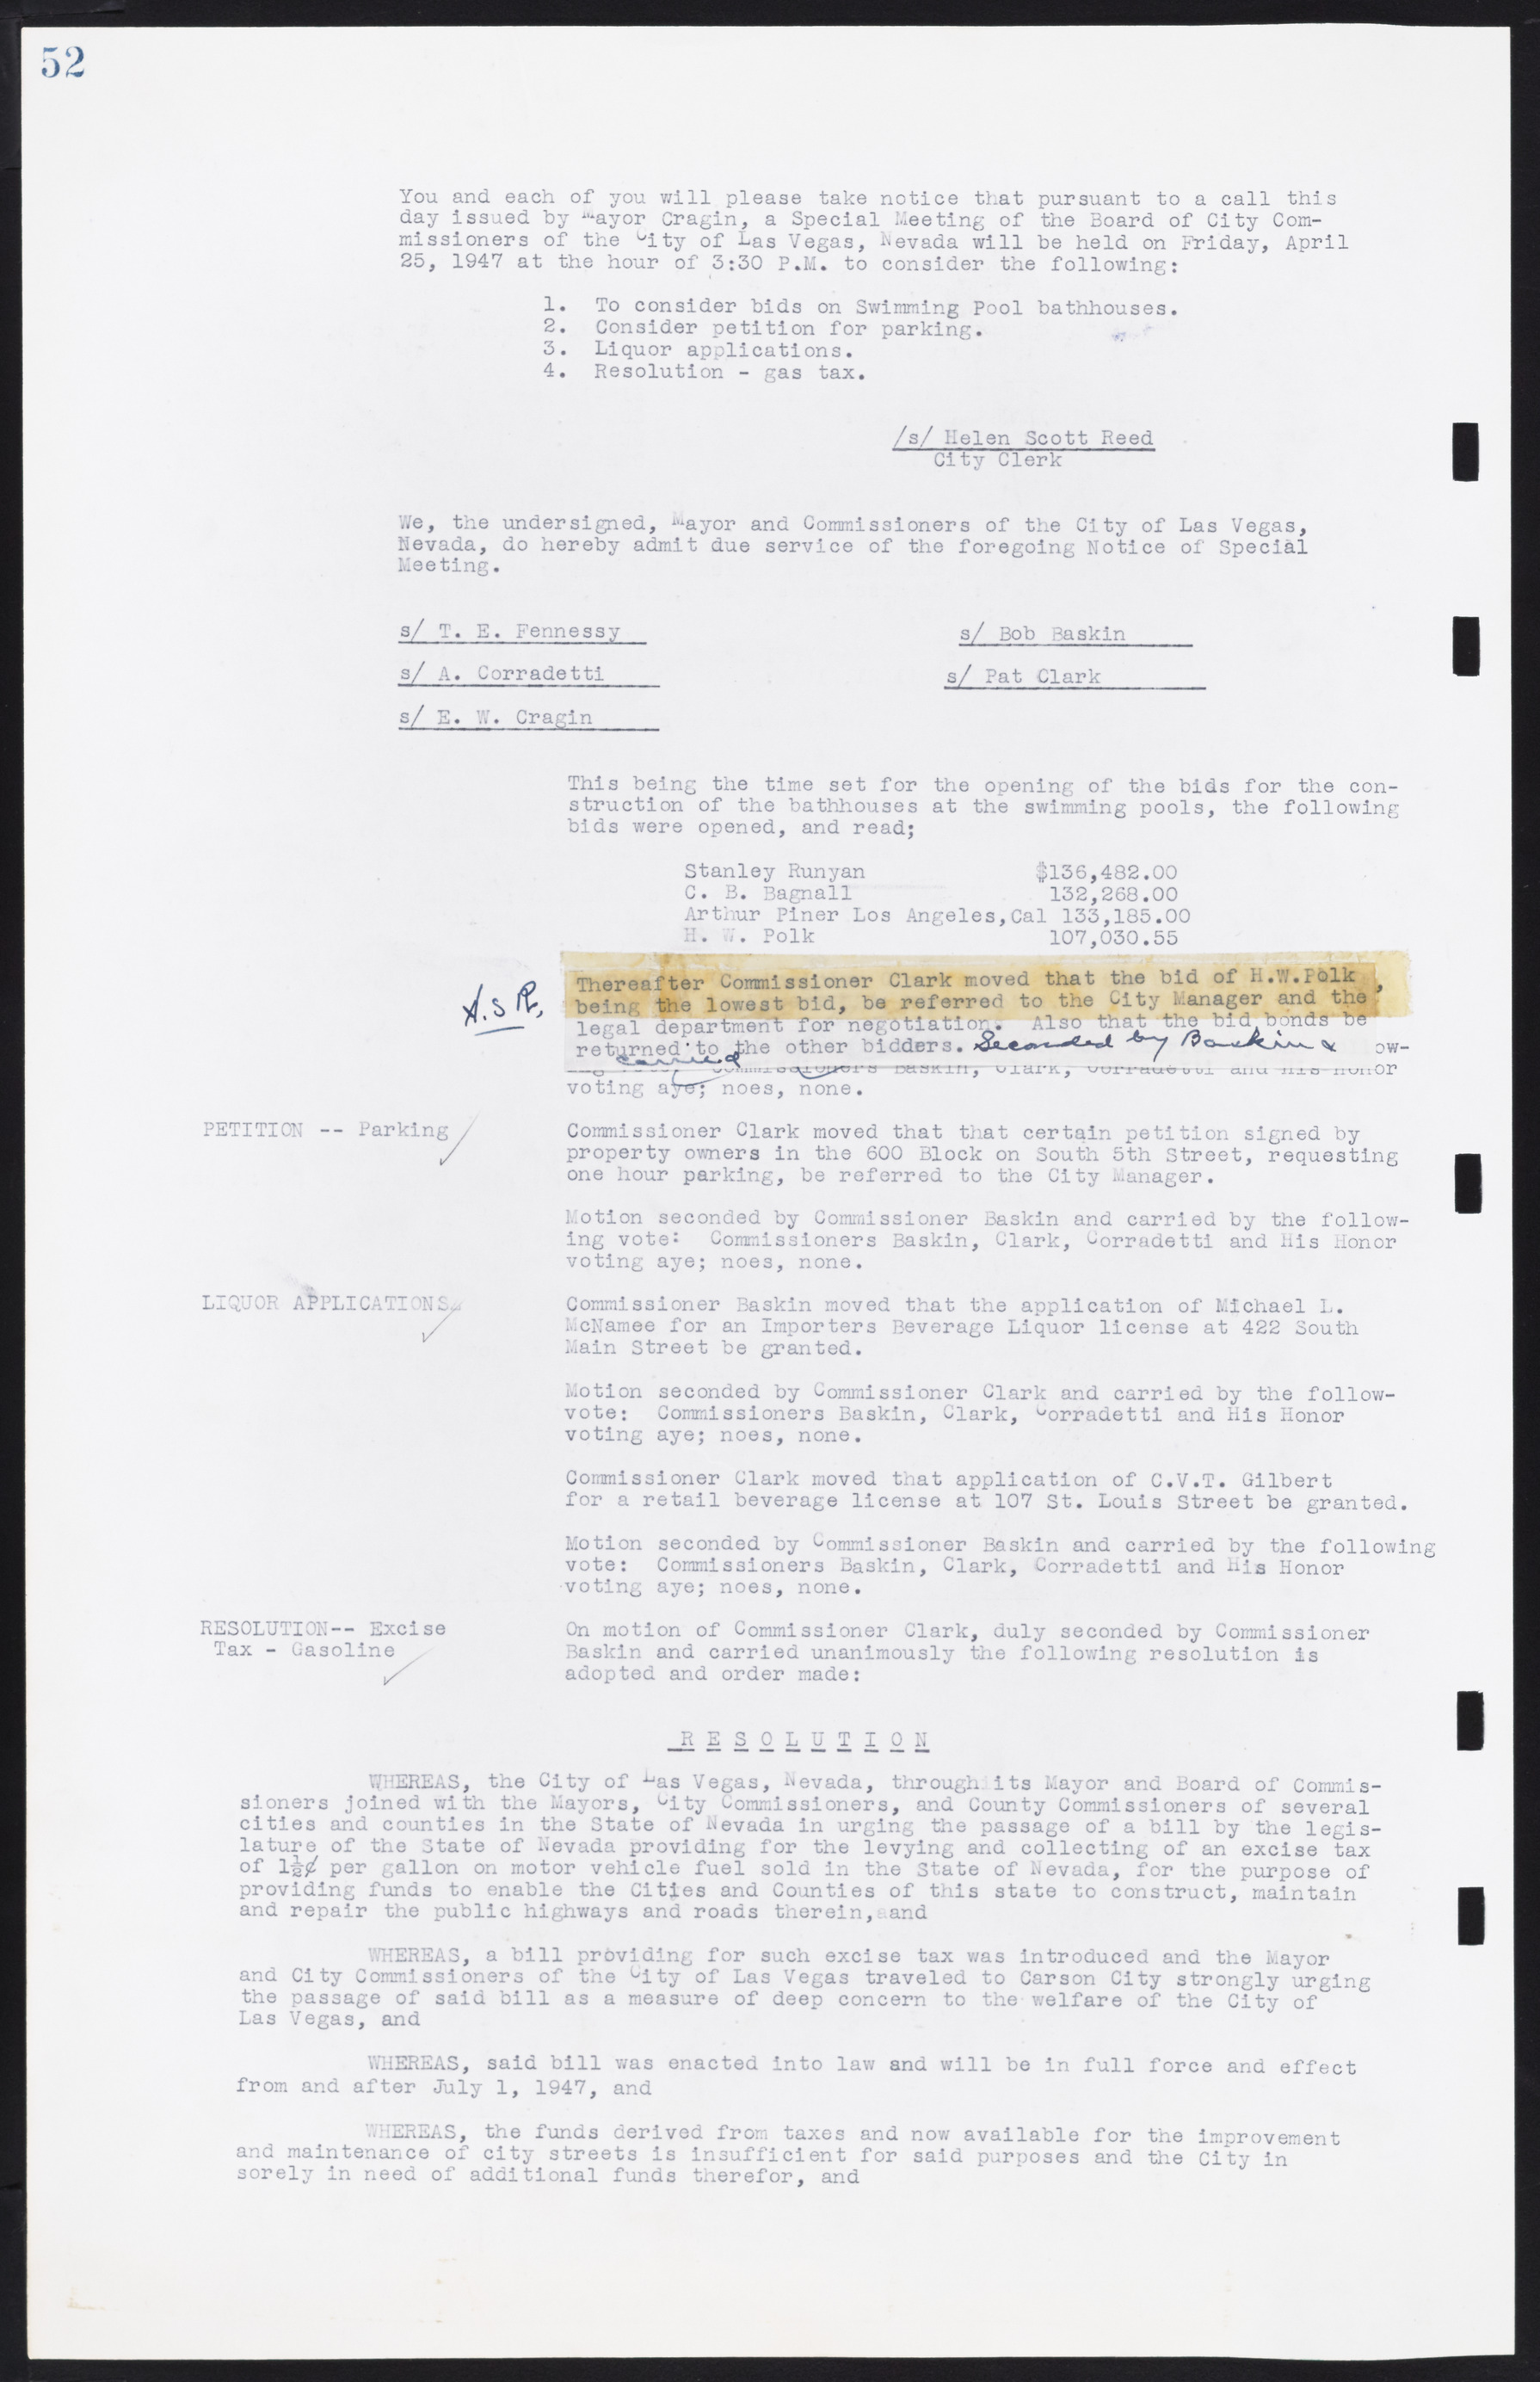 Las Vegas City Commission Minutes, January 7, 1947 to October 26, 1949, lvc000006-67